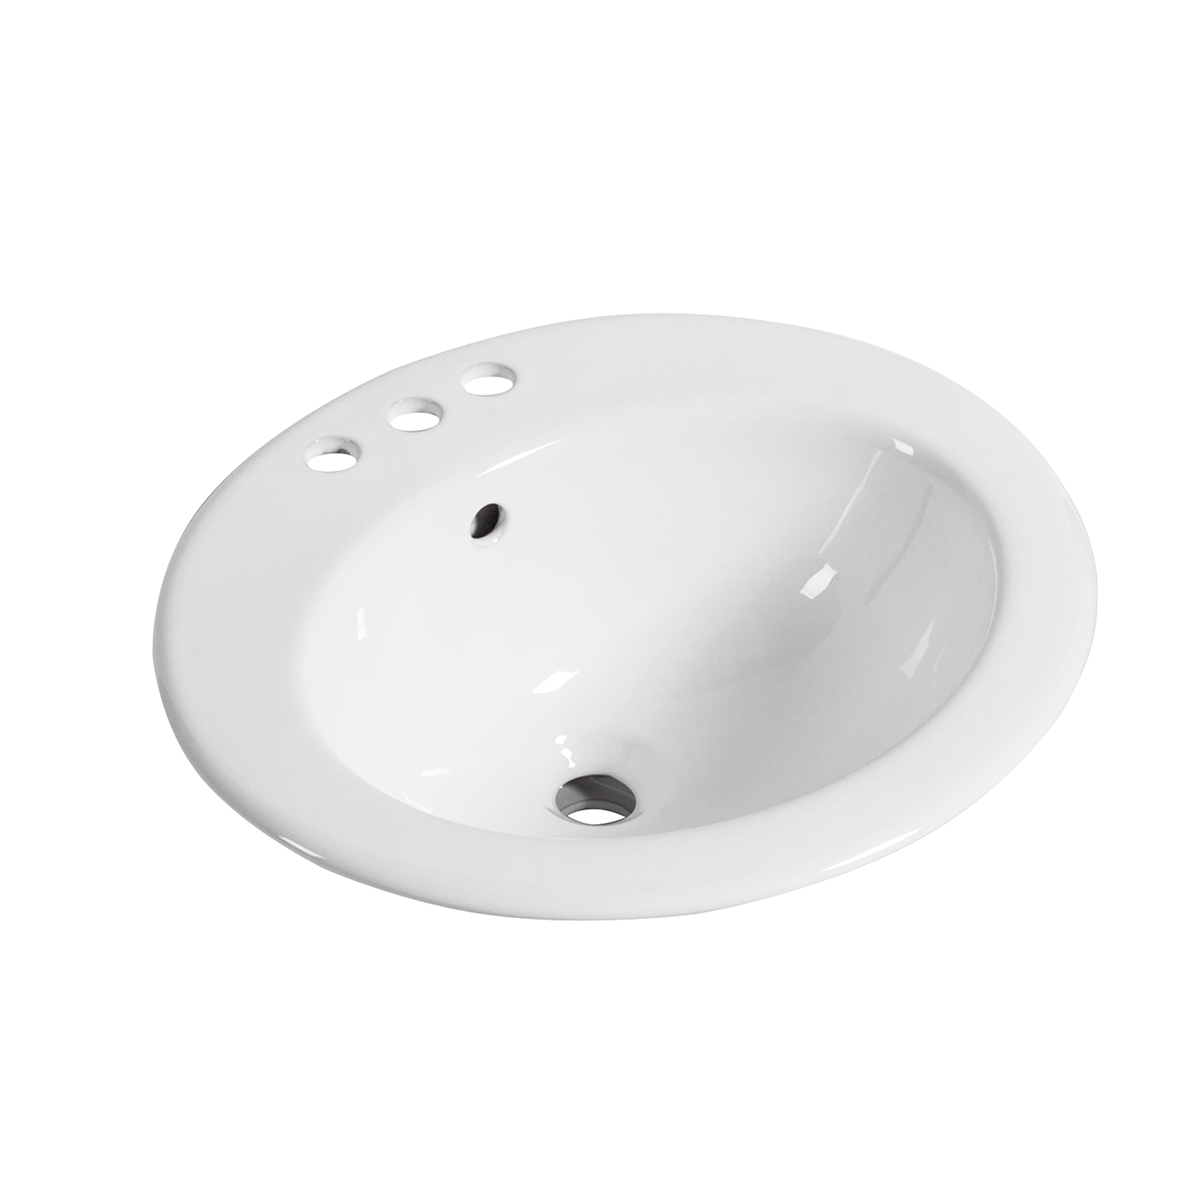 DAX Ceramic Single Bowl Top Mount Bathroom Sink, White Finish,  19-11/16 x 17-11/16 x 8-1/4 Inches (BSN-209-W)